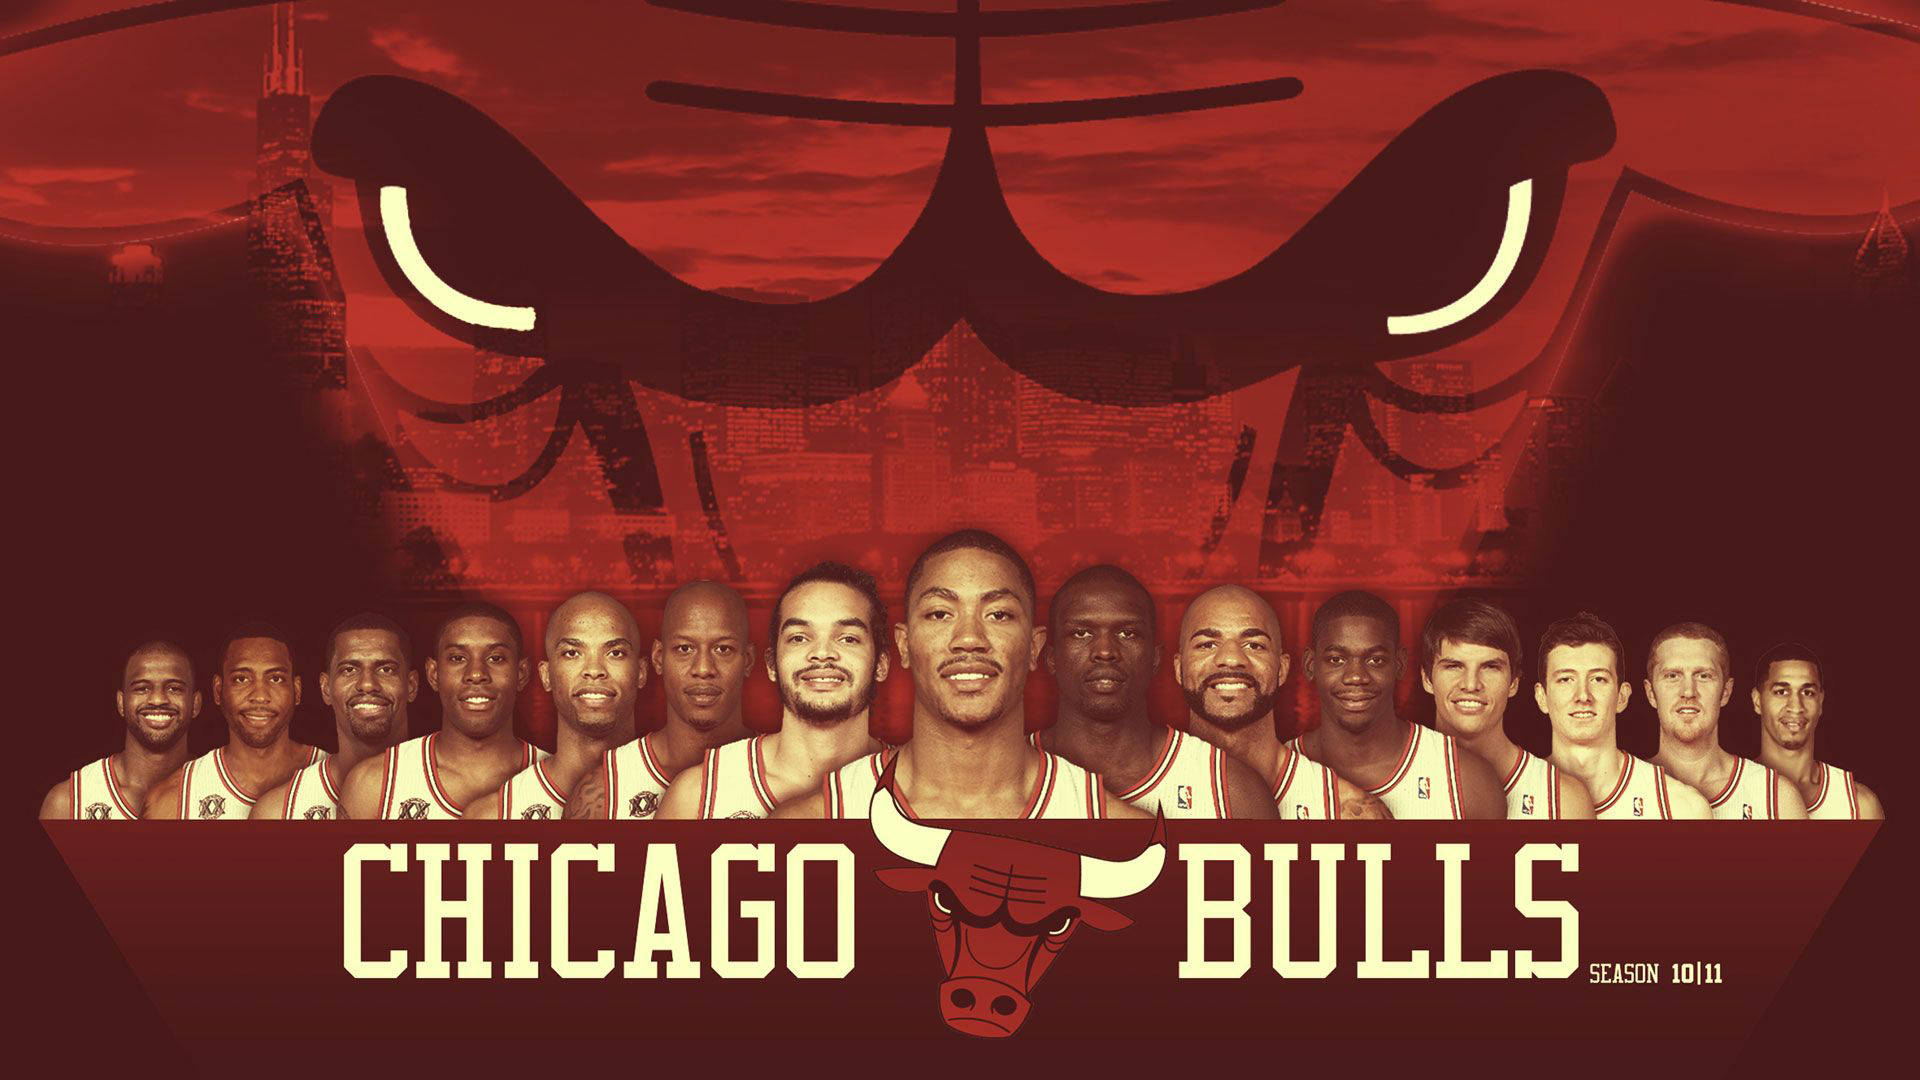 Chicago Bulls Team Photograph